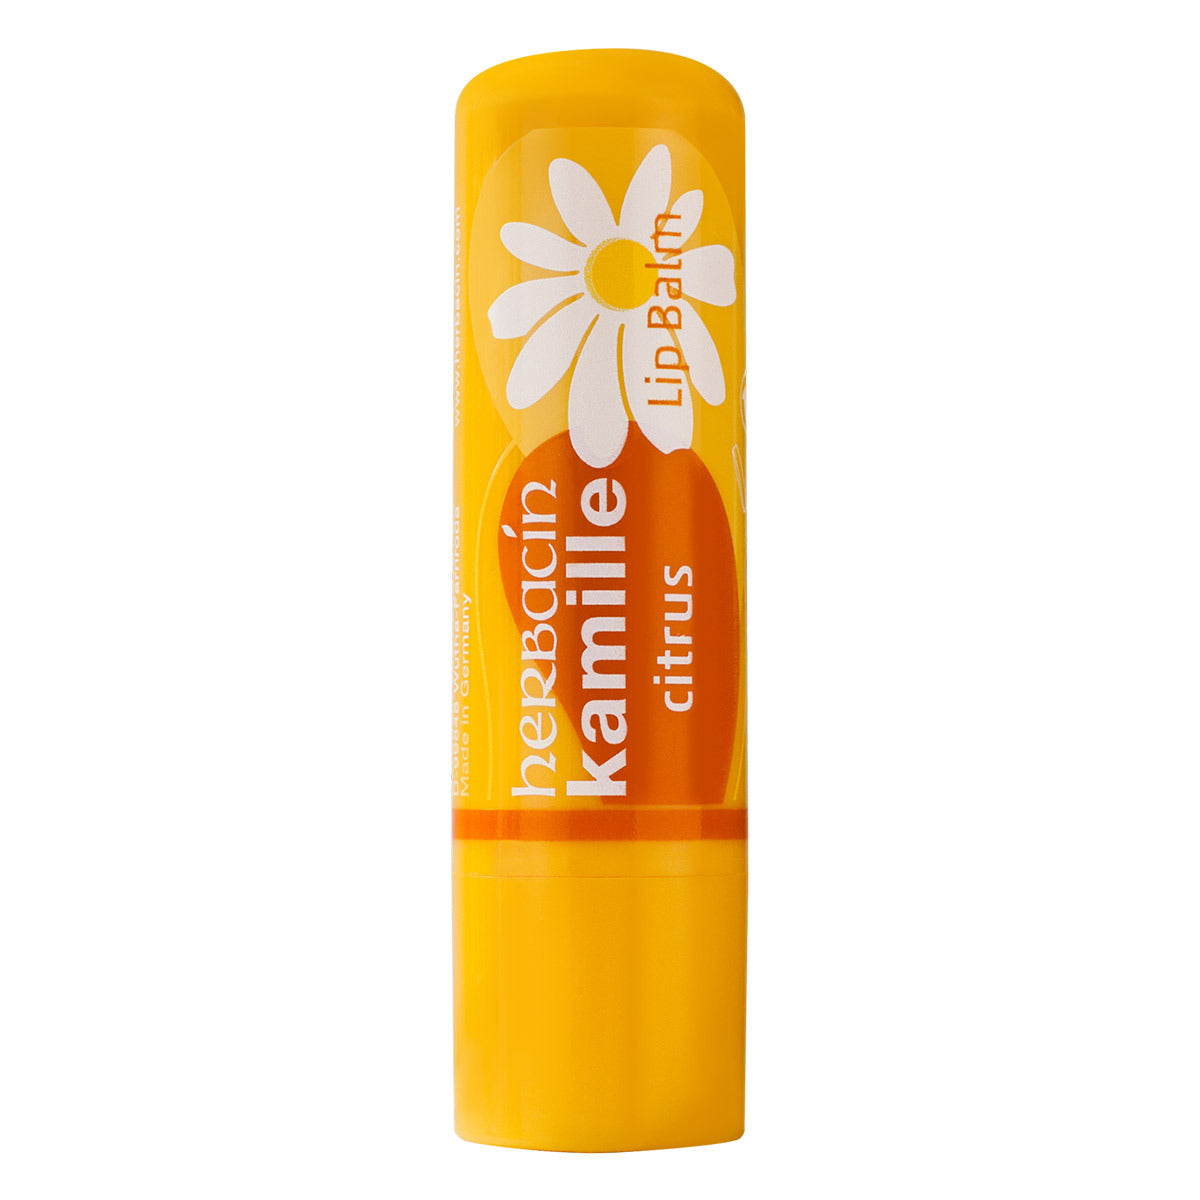 Primary image of Kamille Citrus Lip Balm